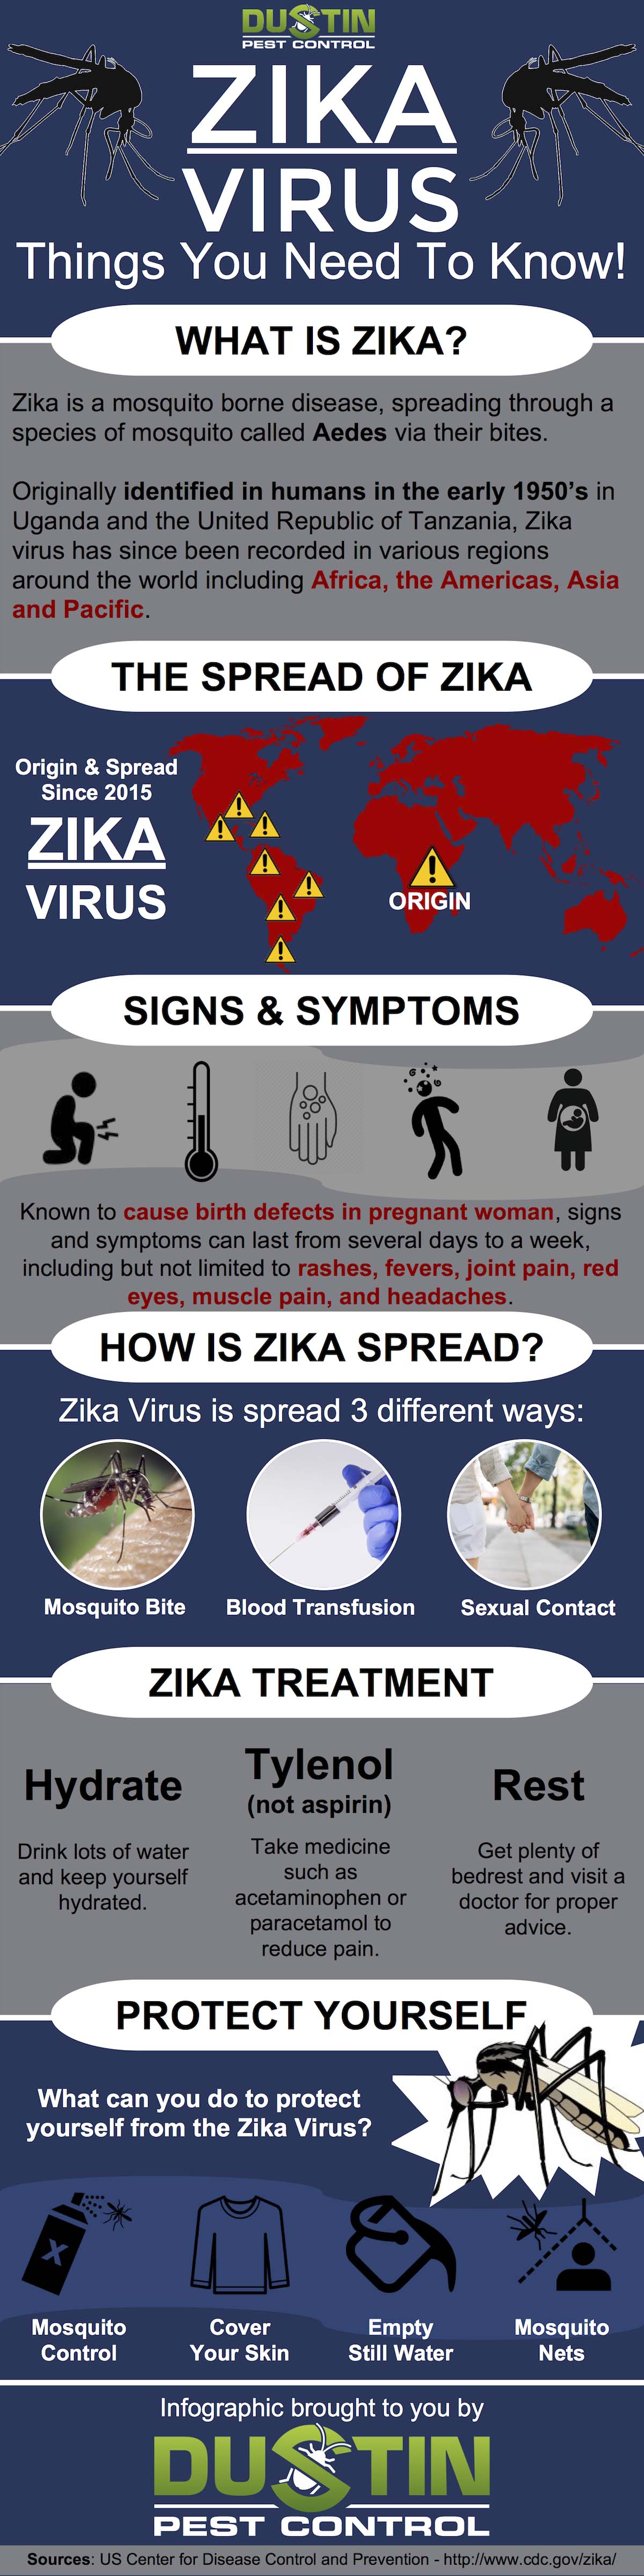 Zika Virus: Things You Need to Know